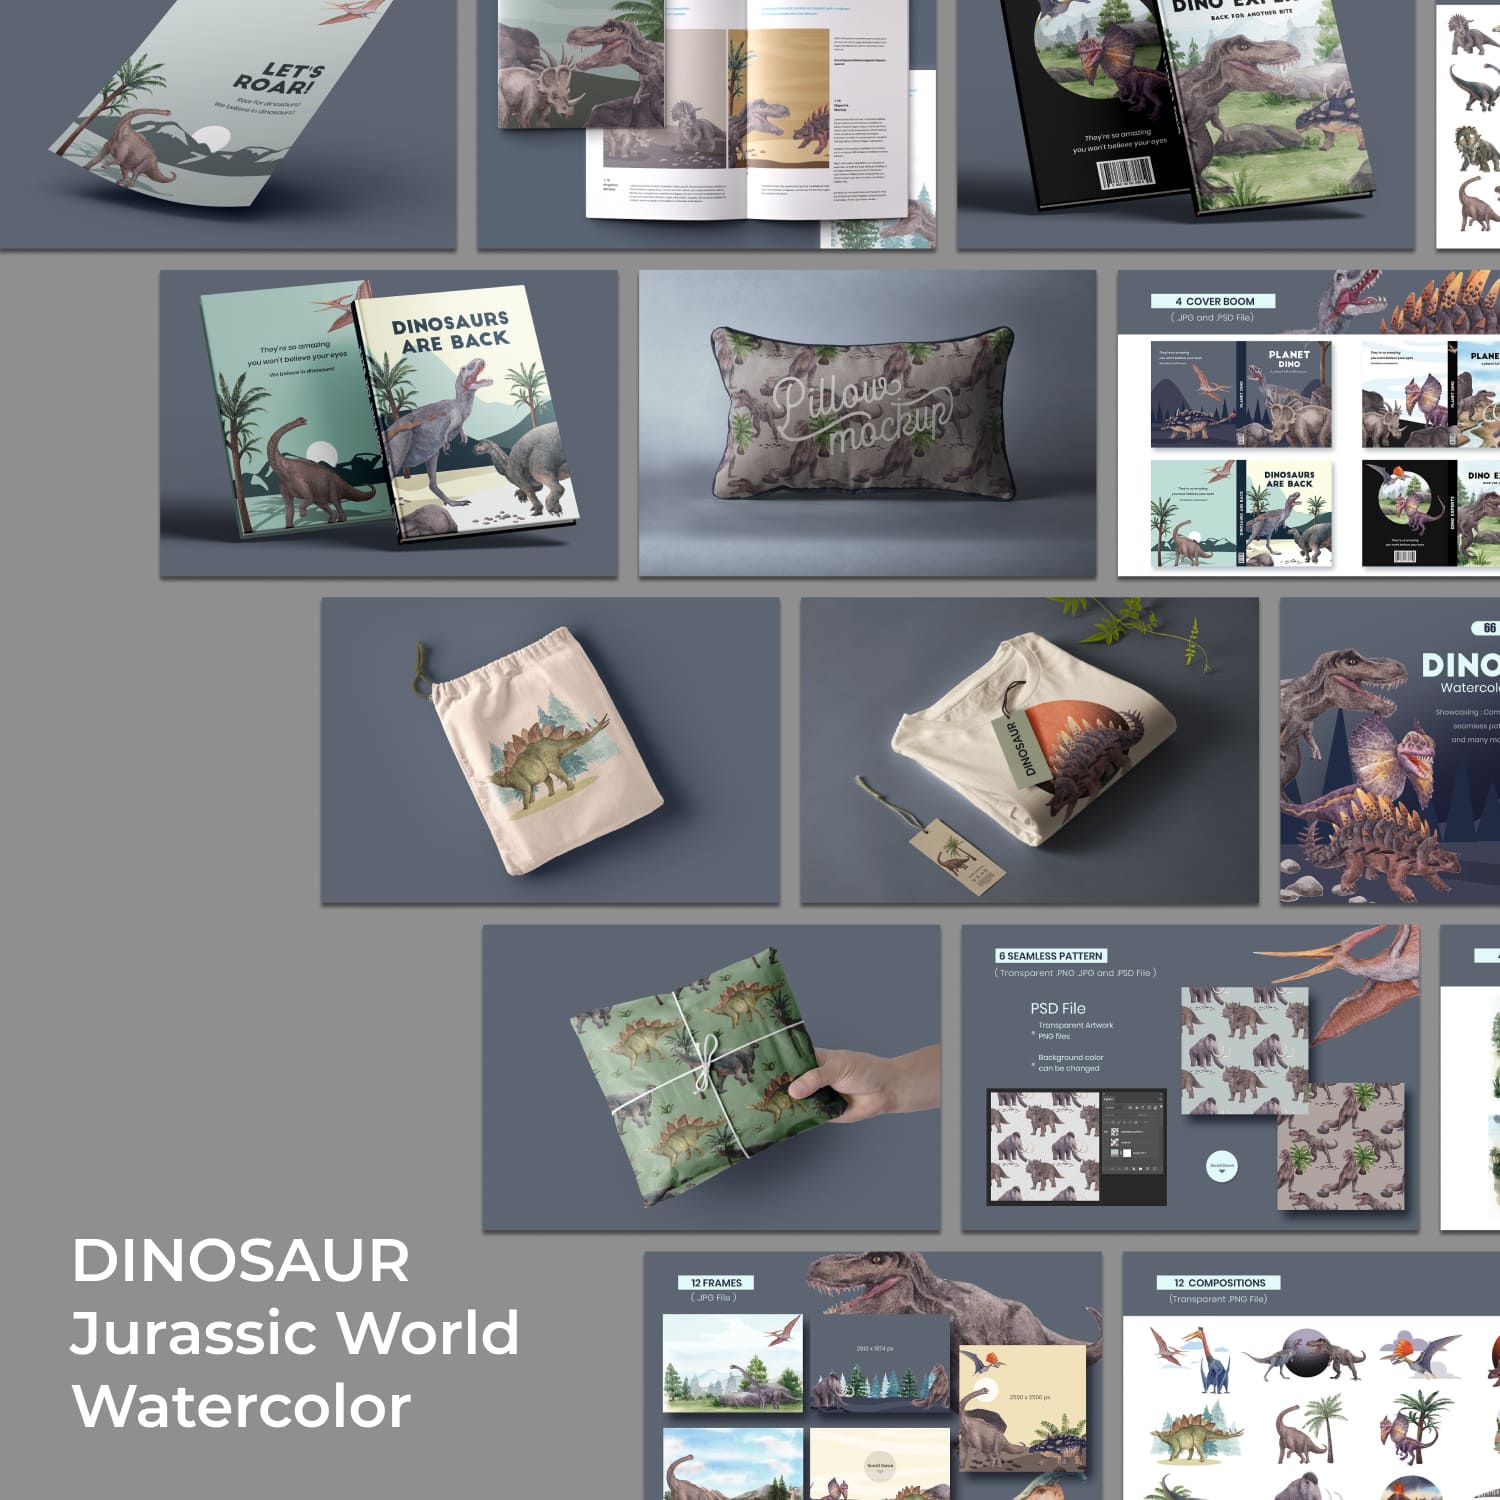 Dinosaur Jurassic World Watercolor Set cover image.